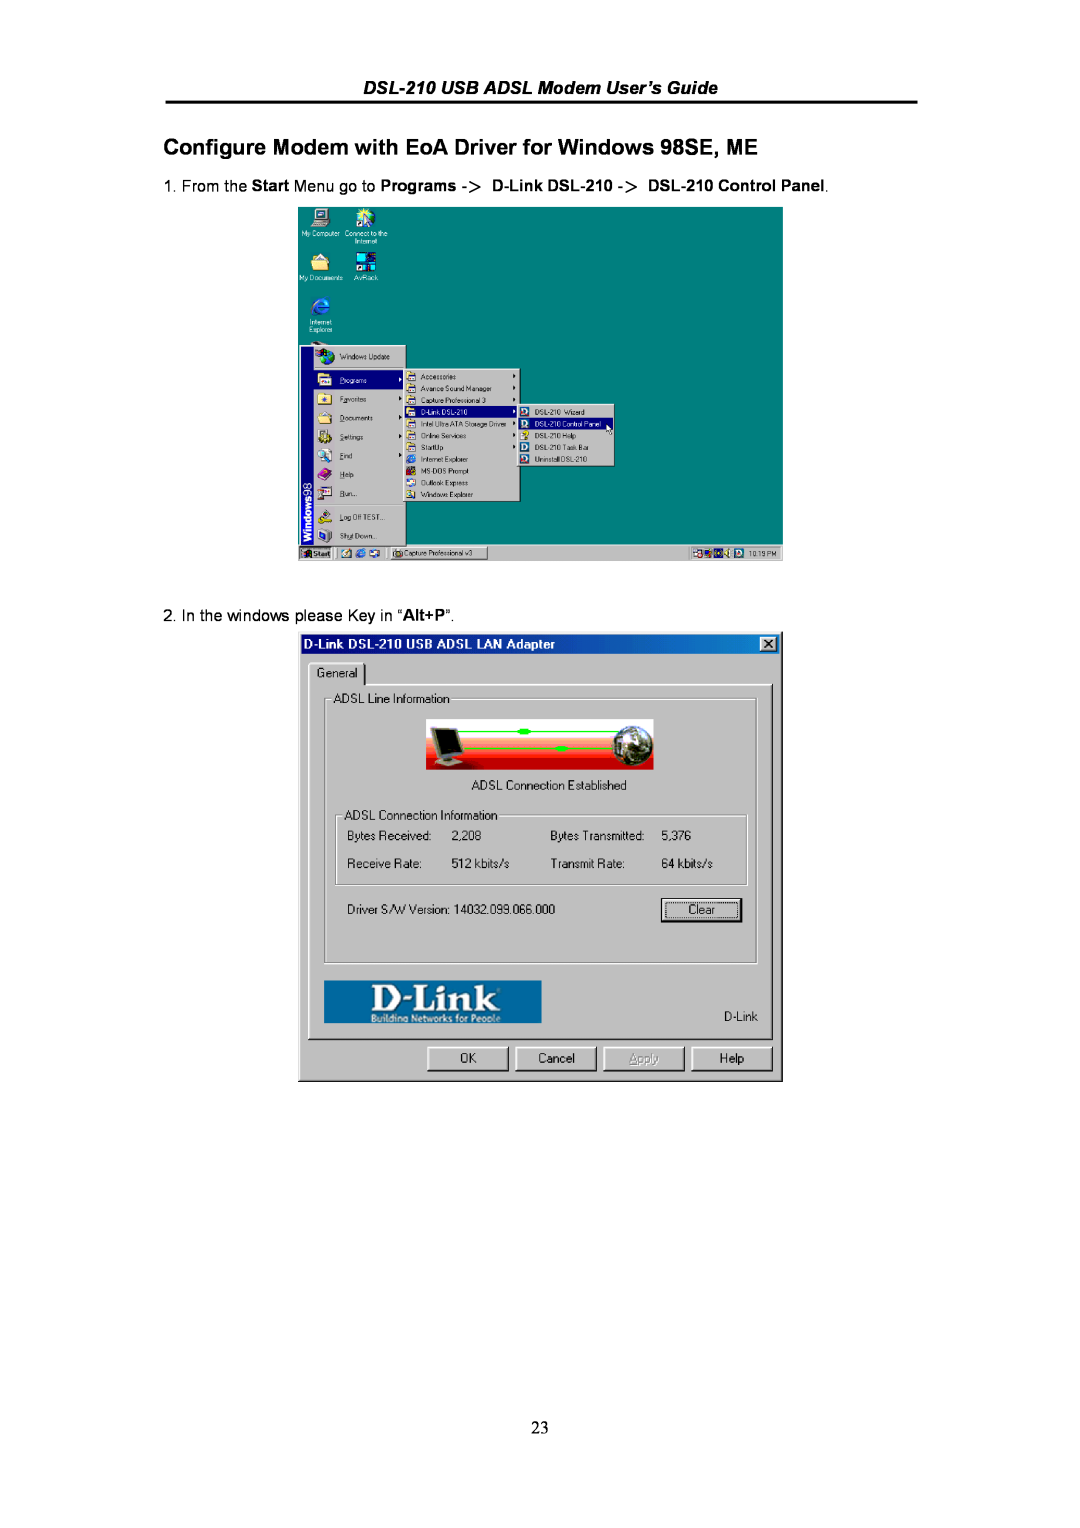 D-Link manual Configure Modem with EoA Driver for Windows 98SE, ME, DSL-210 USB ADSL Modem User’s Guide 